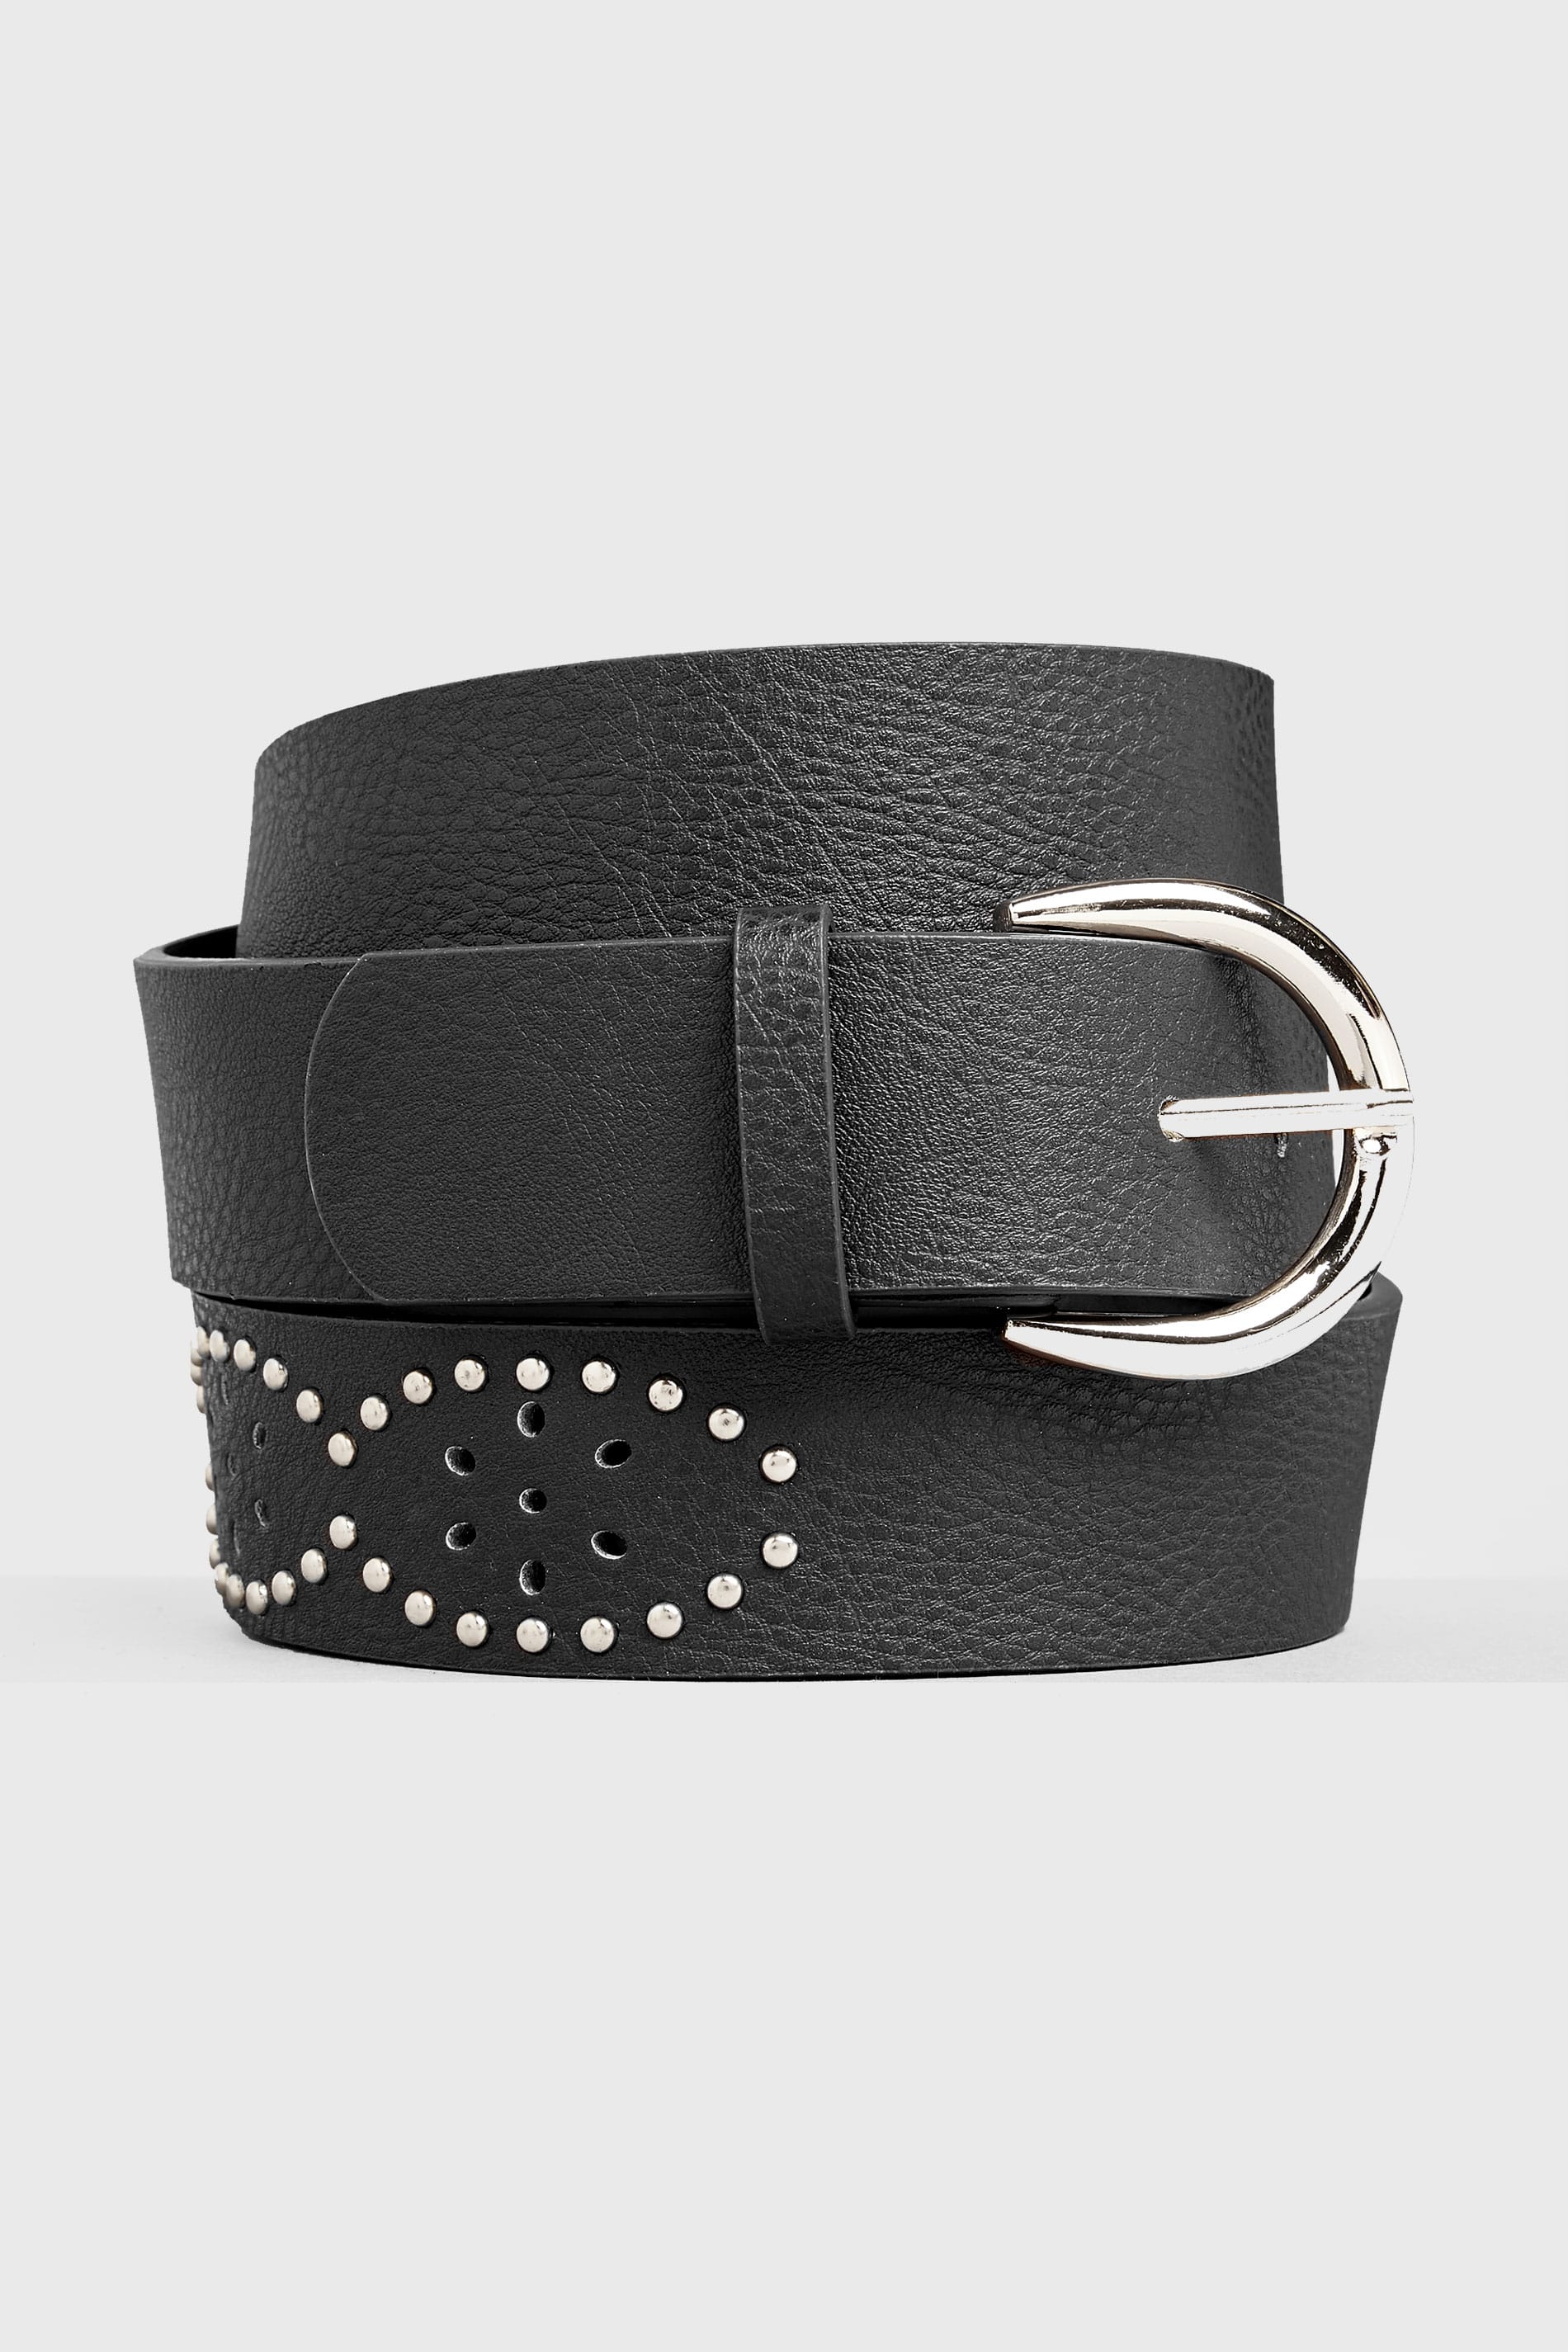 Black Studded Belt | Yours Clothing 2